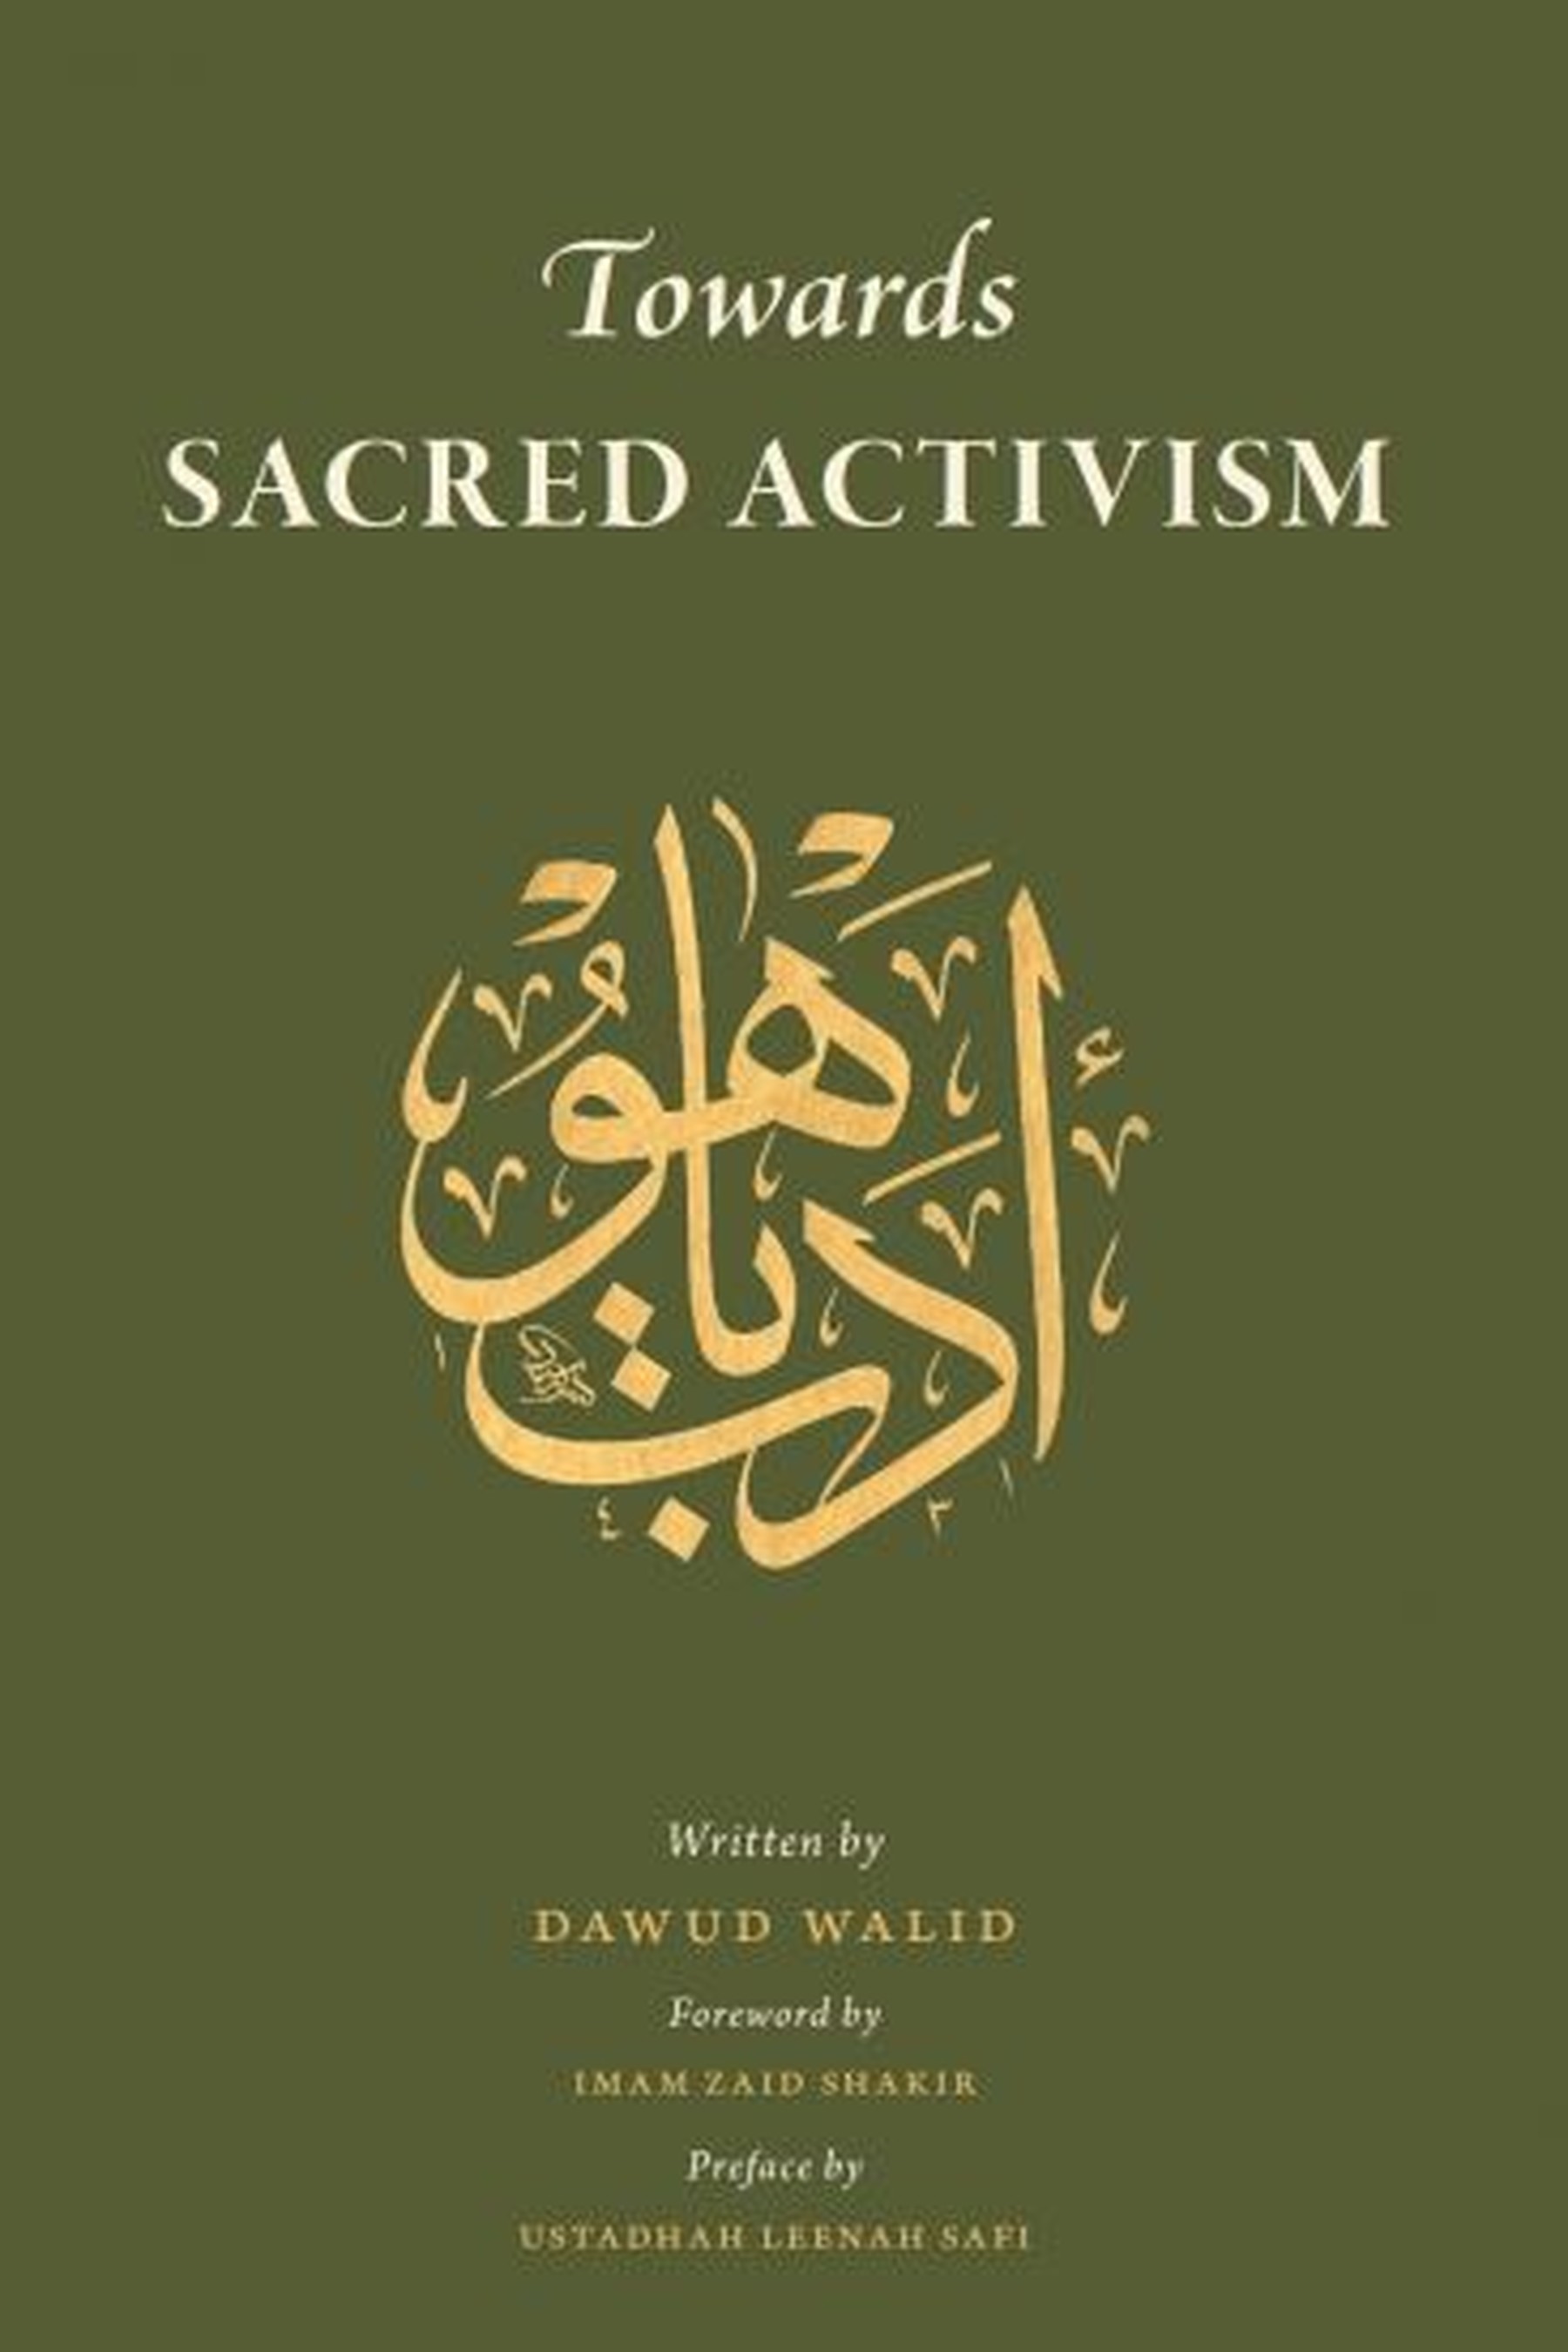 Towards sacred activism